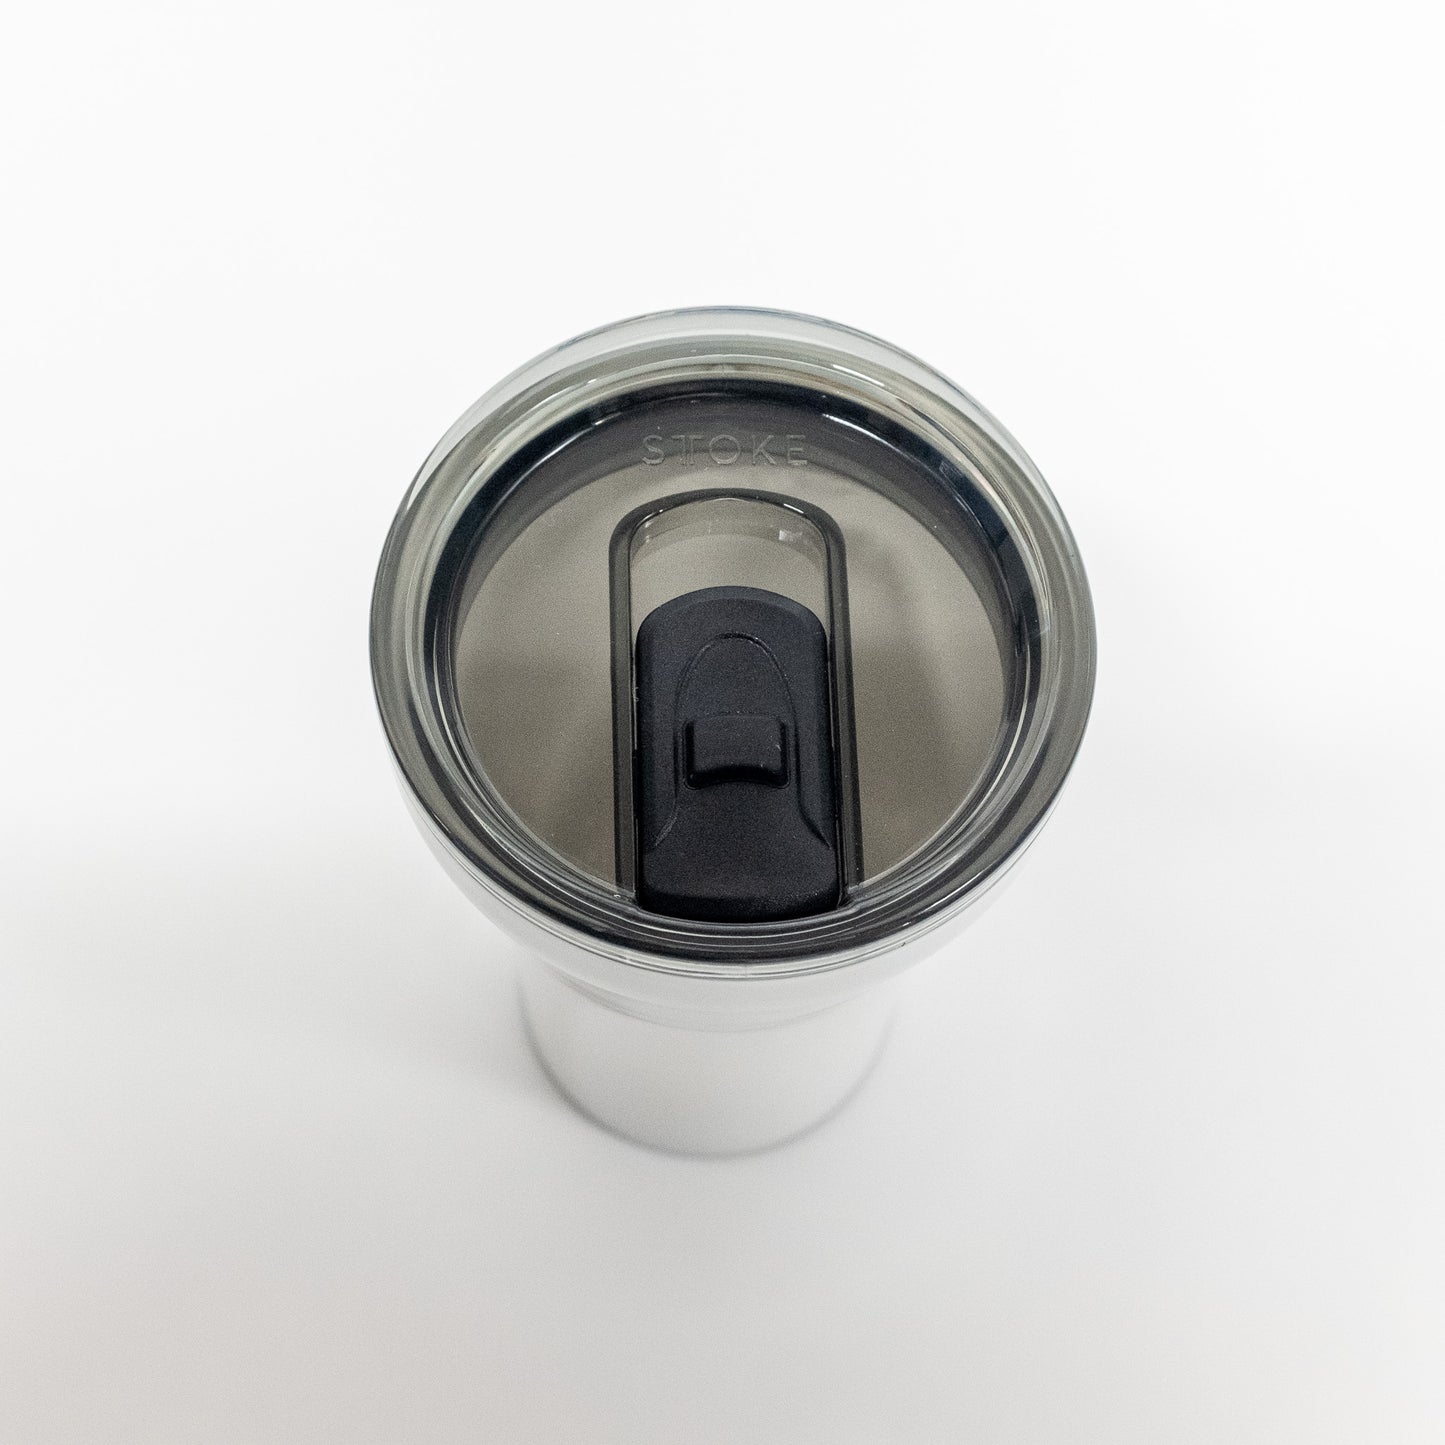 STTOKE オリジナルリユーザブルカップ - BE A GOOD NEIGHBOR COFFEE KIOSK